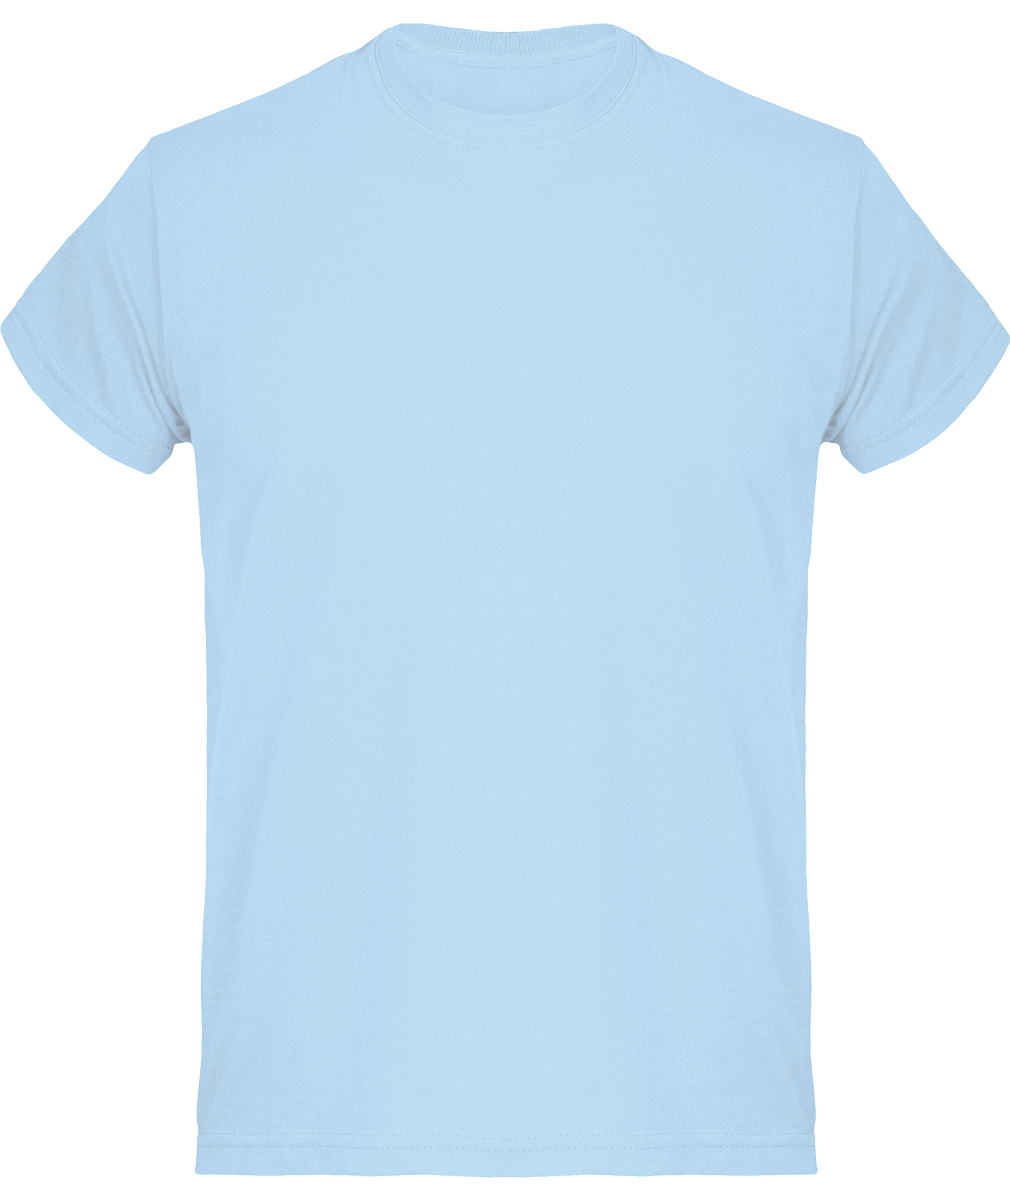 Basic Cotton T-Shirt For Men Ideal For Customization Sky Blue